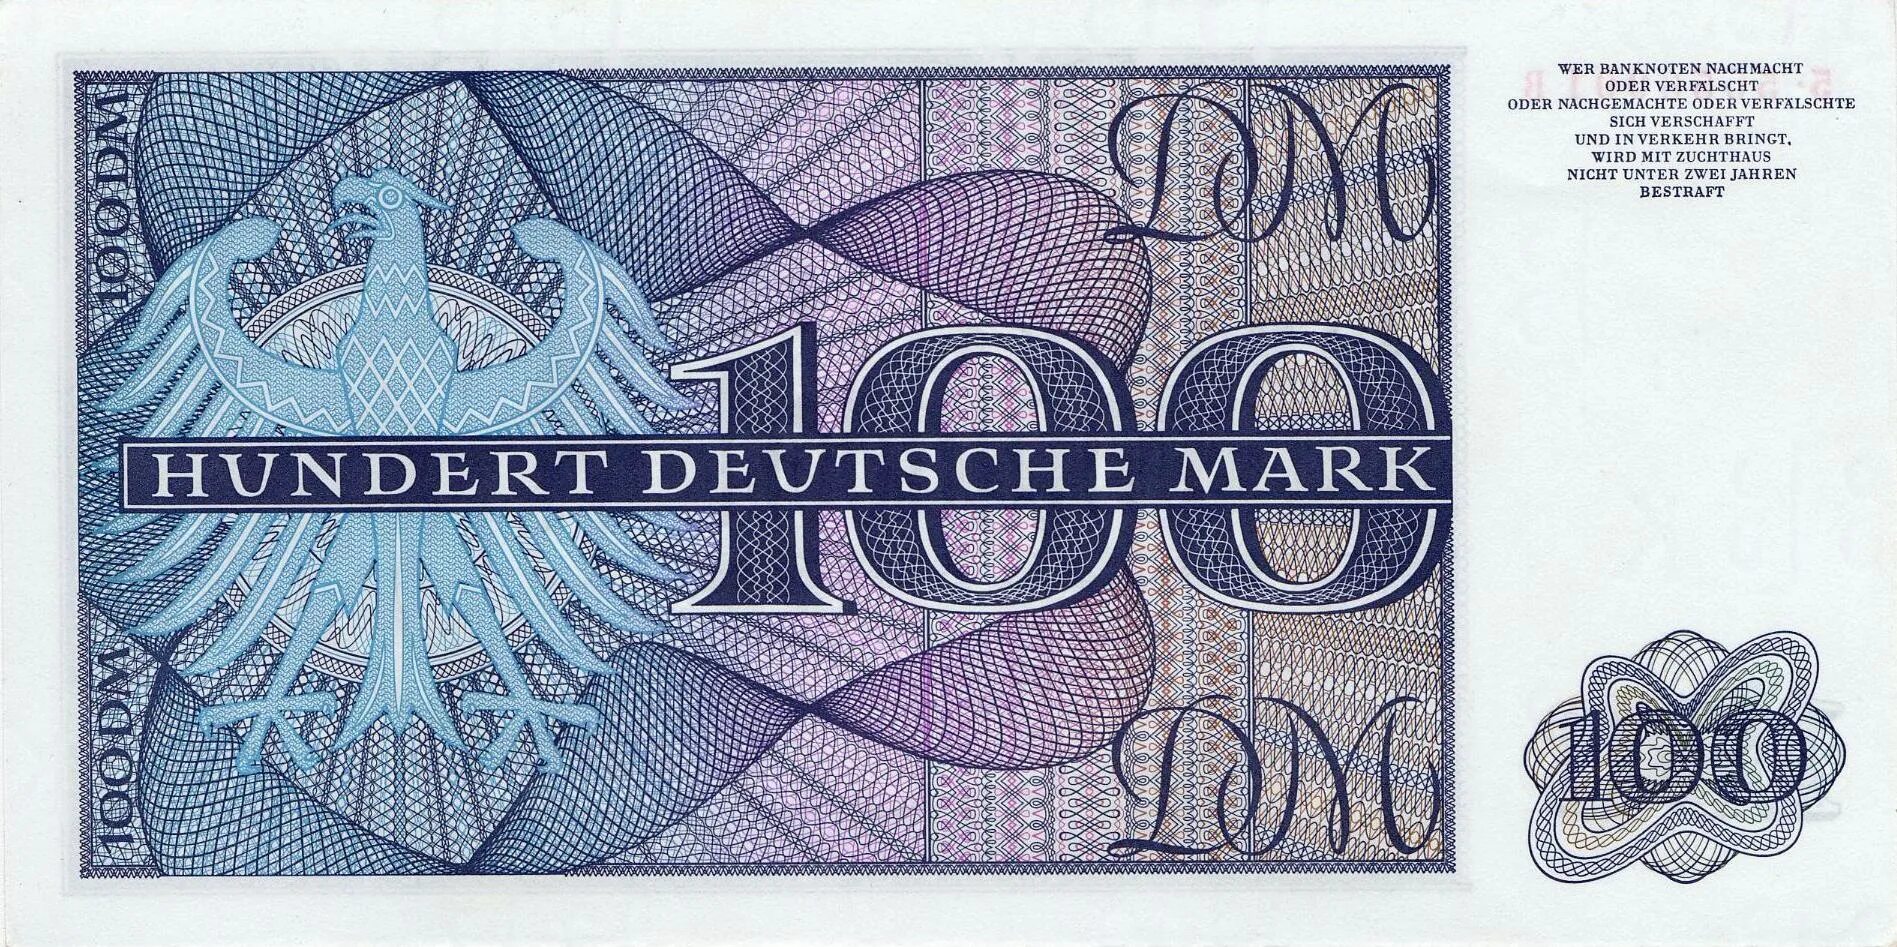 Банкноты ФРГ. Немецкая марка банкноты. Марки ФРГ банкноты. Немецкая марка (Deutsche Mark).